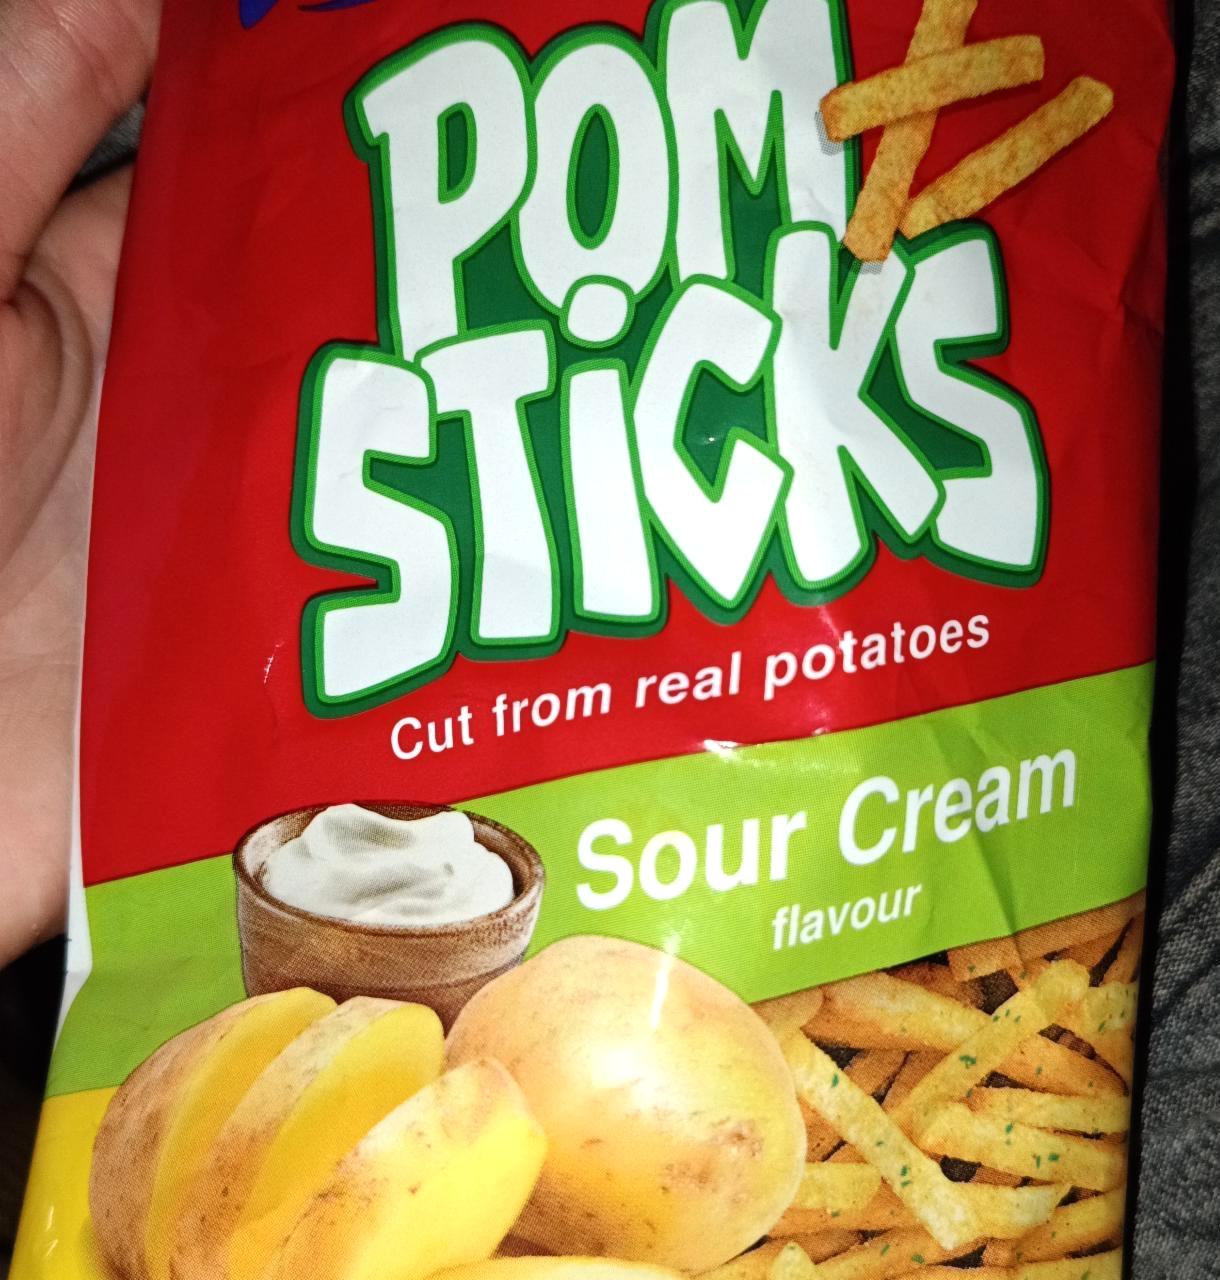 Képek - Pom Sticks burgonya chips Sour cream